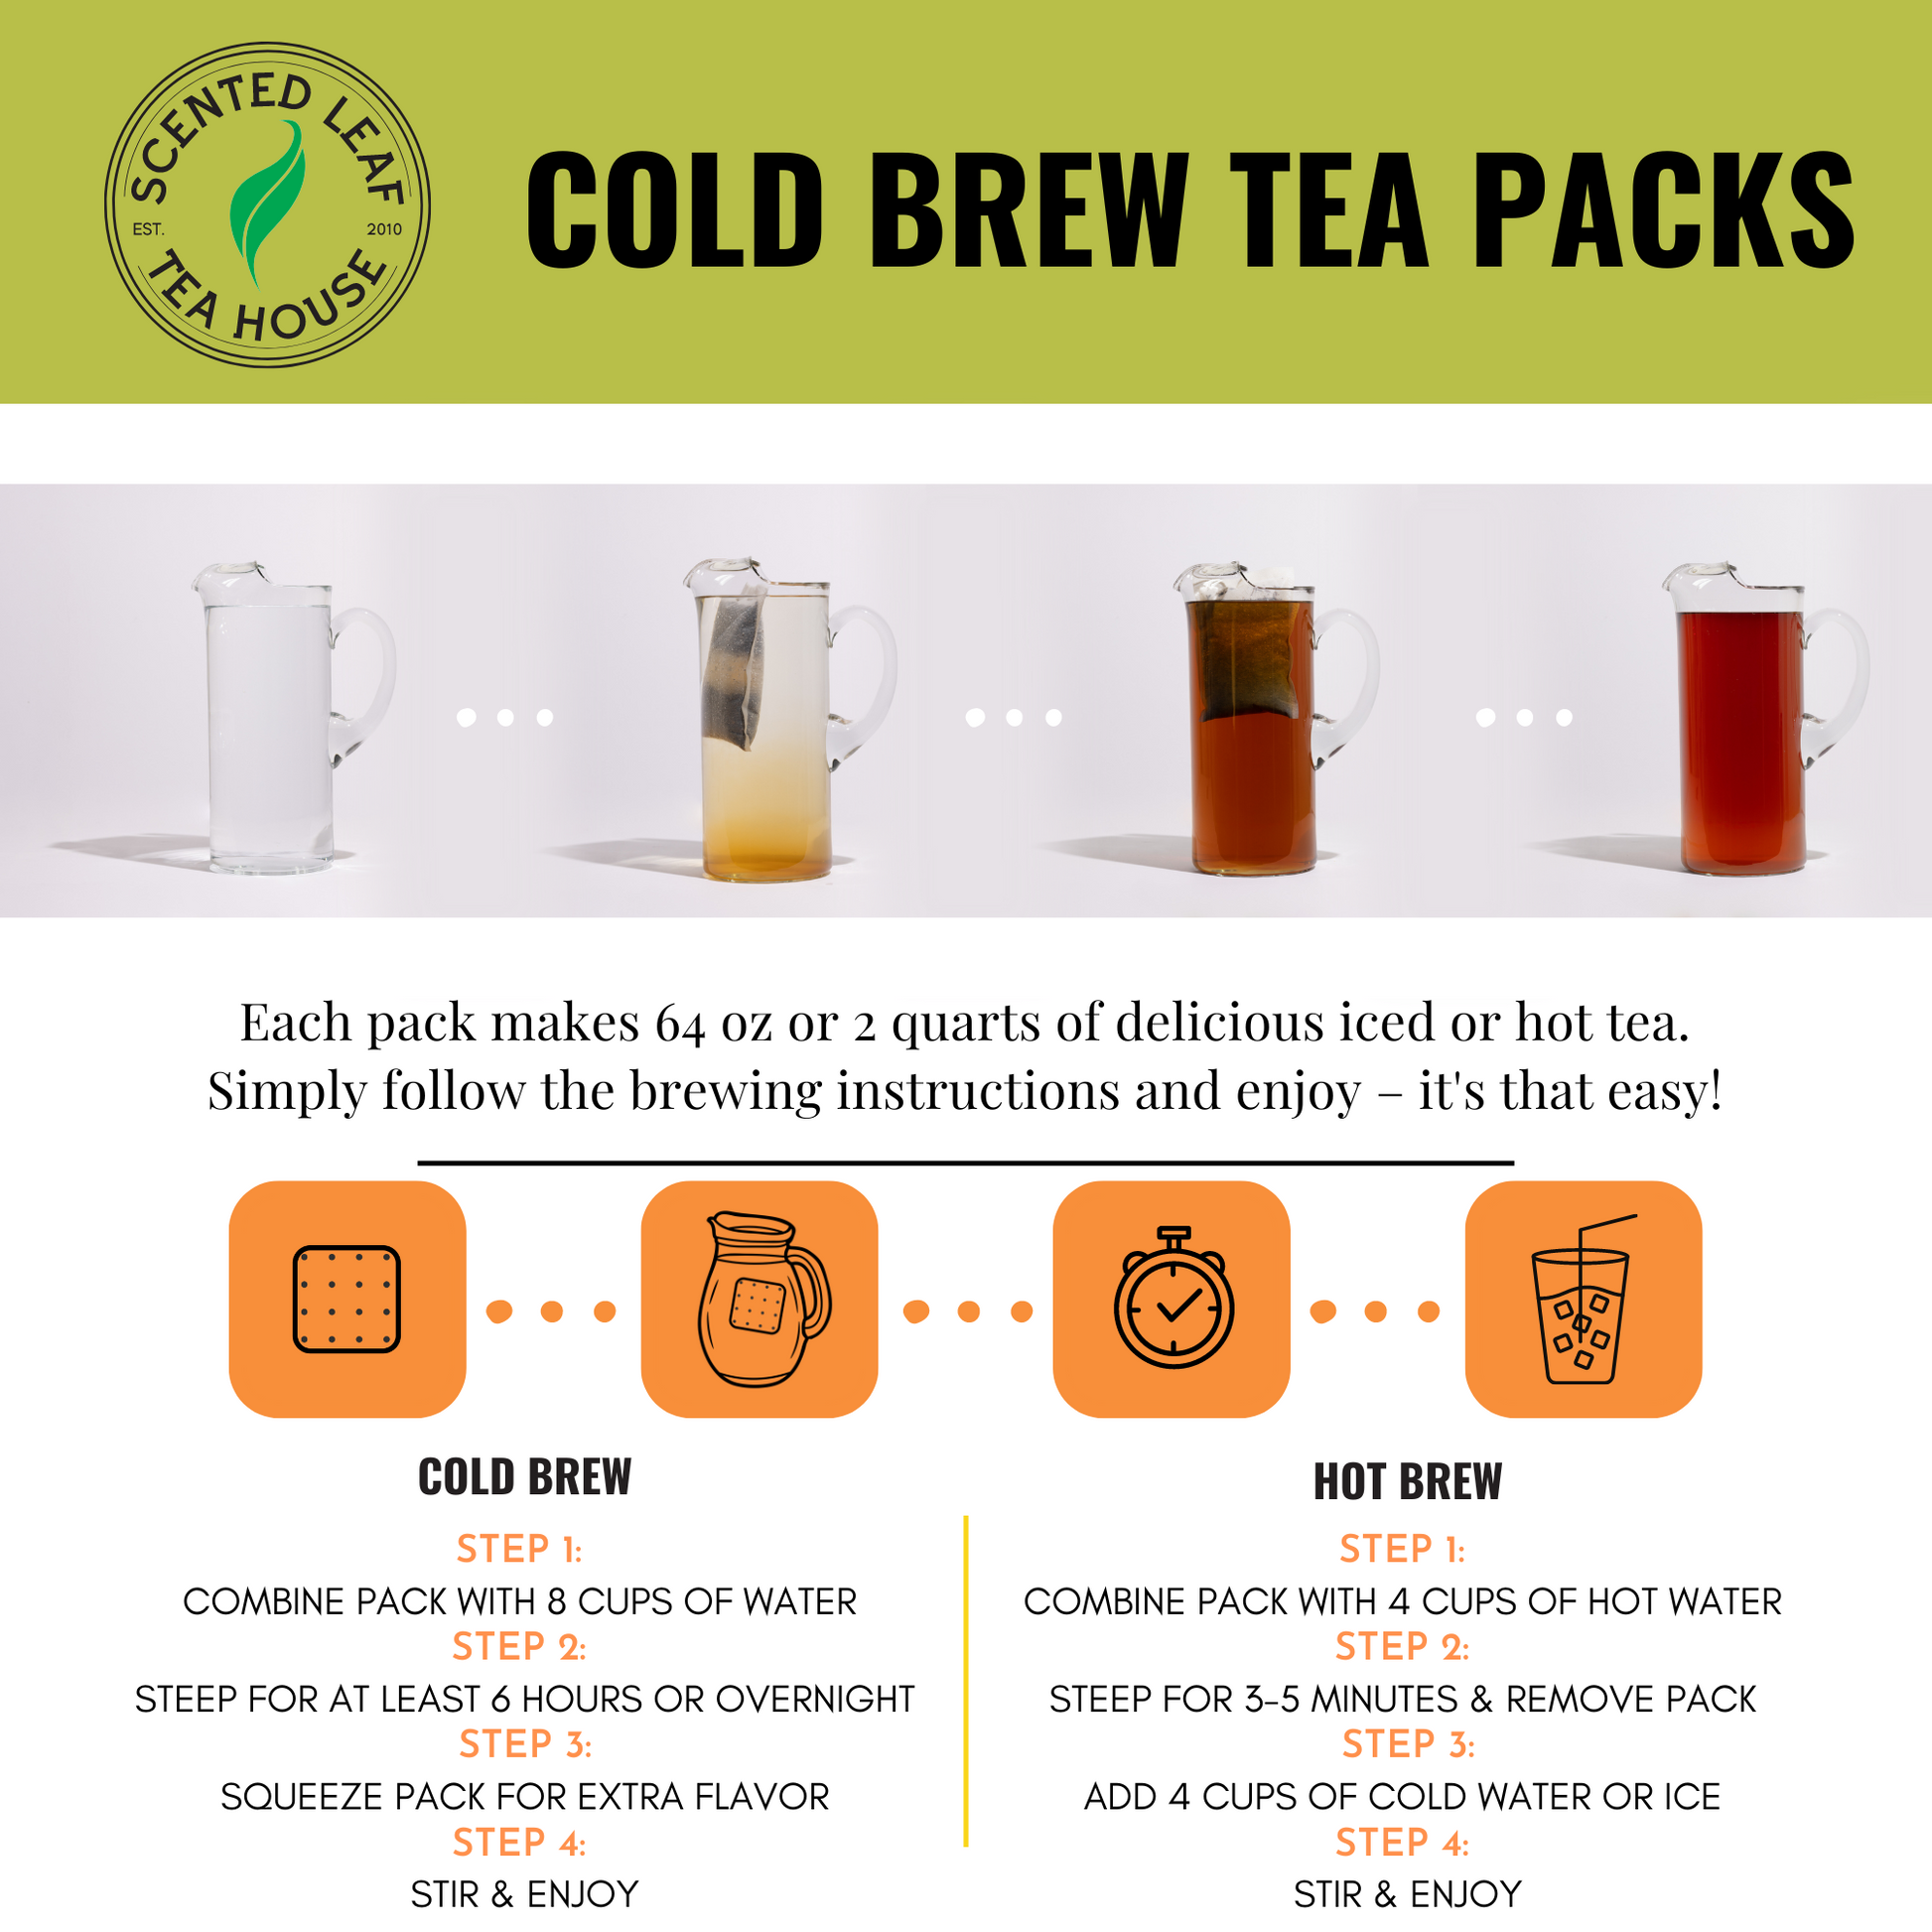 How to Brew Iced Tea